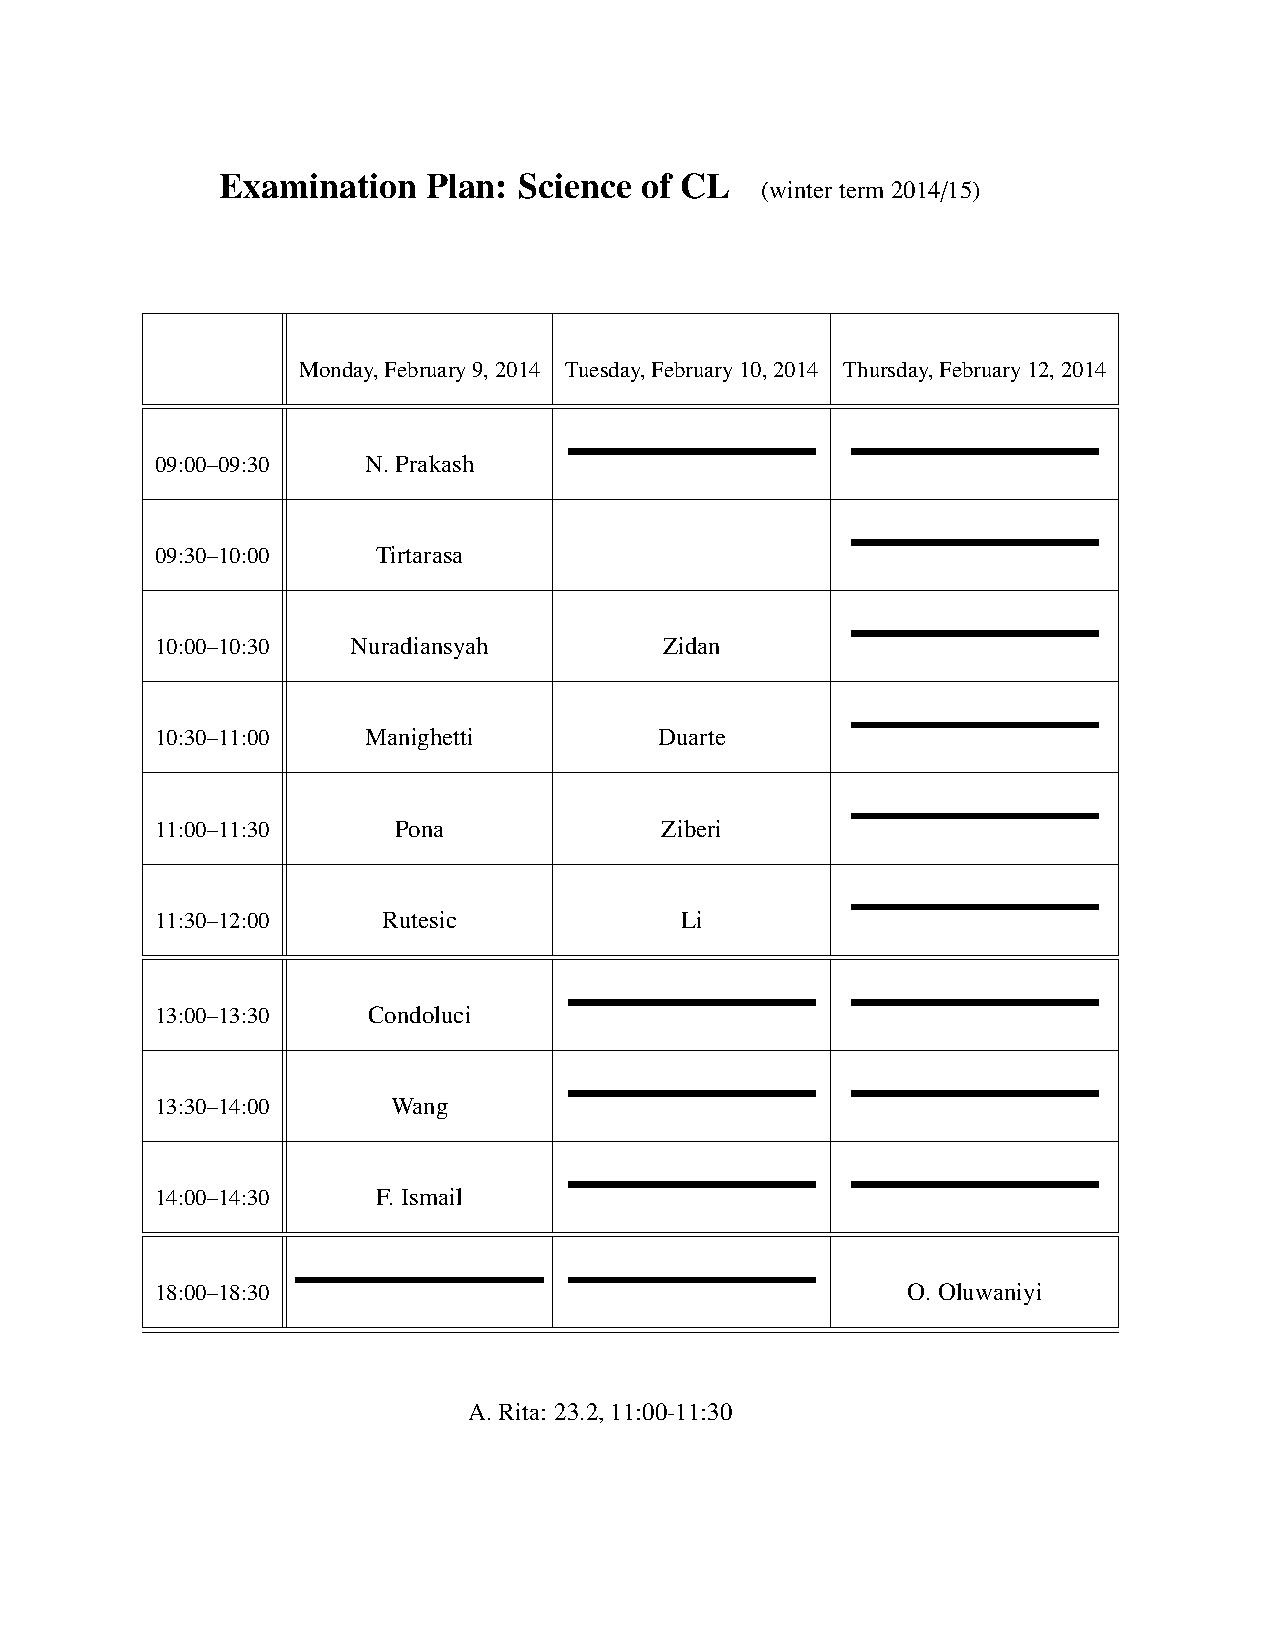 ExaminationPlan-2.pdf